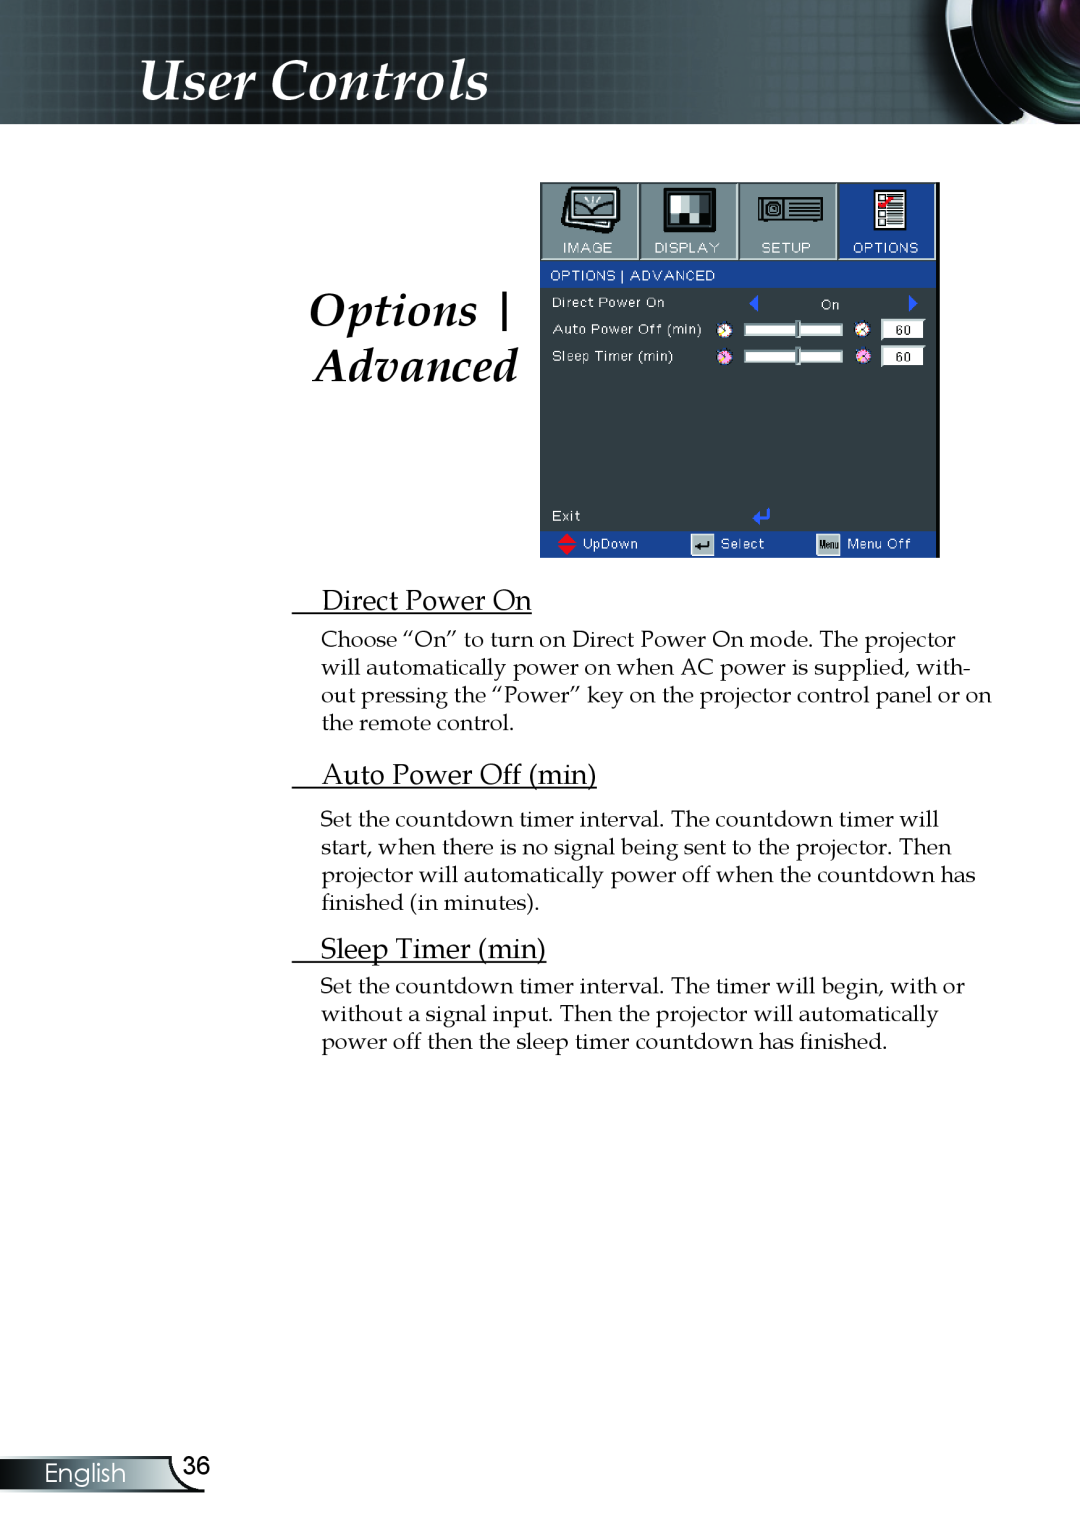 Optoma Technology TX330 Options Advanced, Direct Power On, Auto Power Off min, Sleep Timer min, User Controls, English 